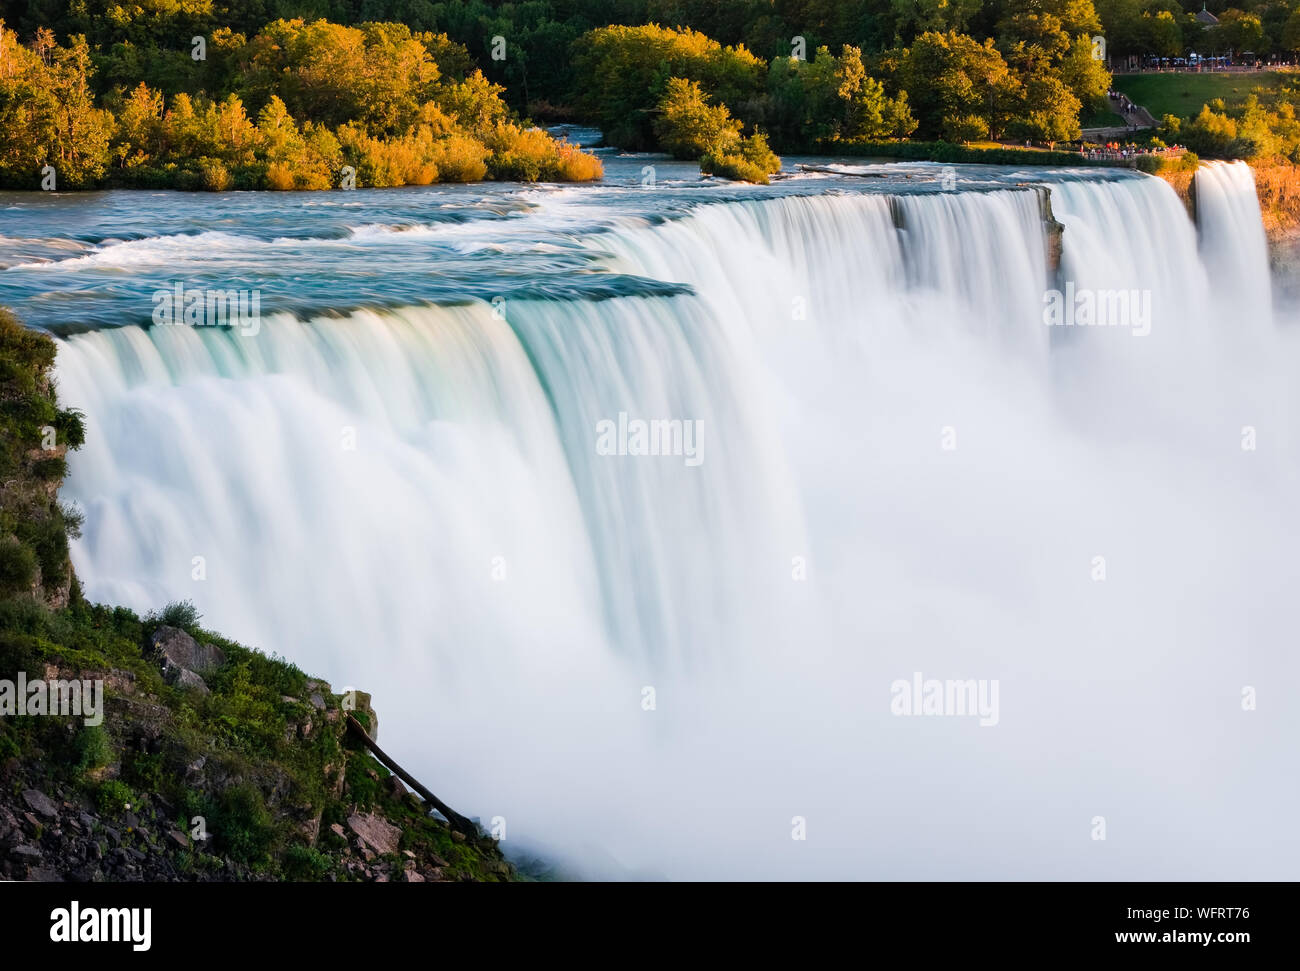 Niagara Falls from USA side Stock Photo